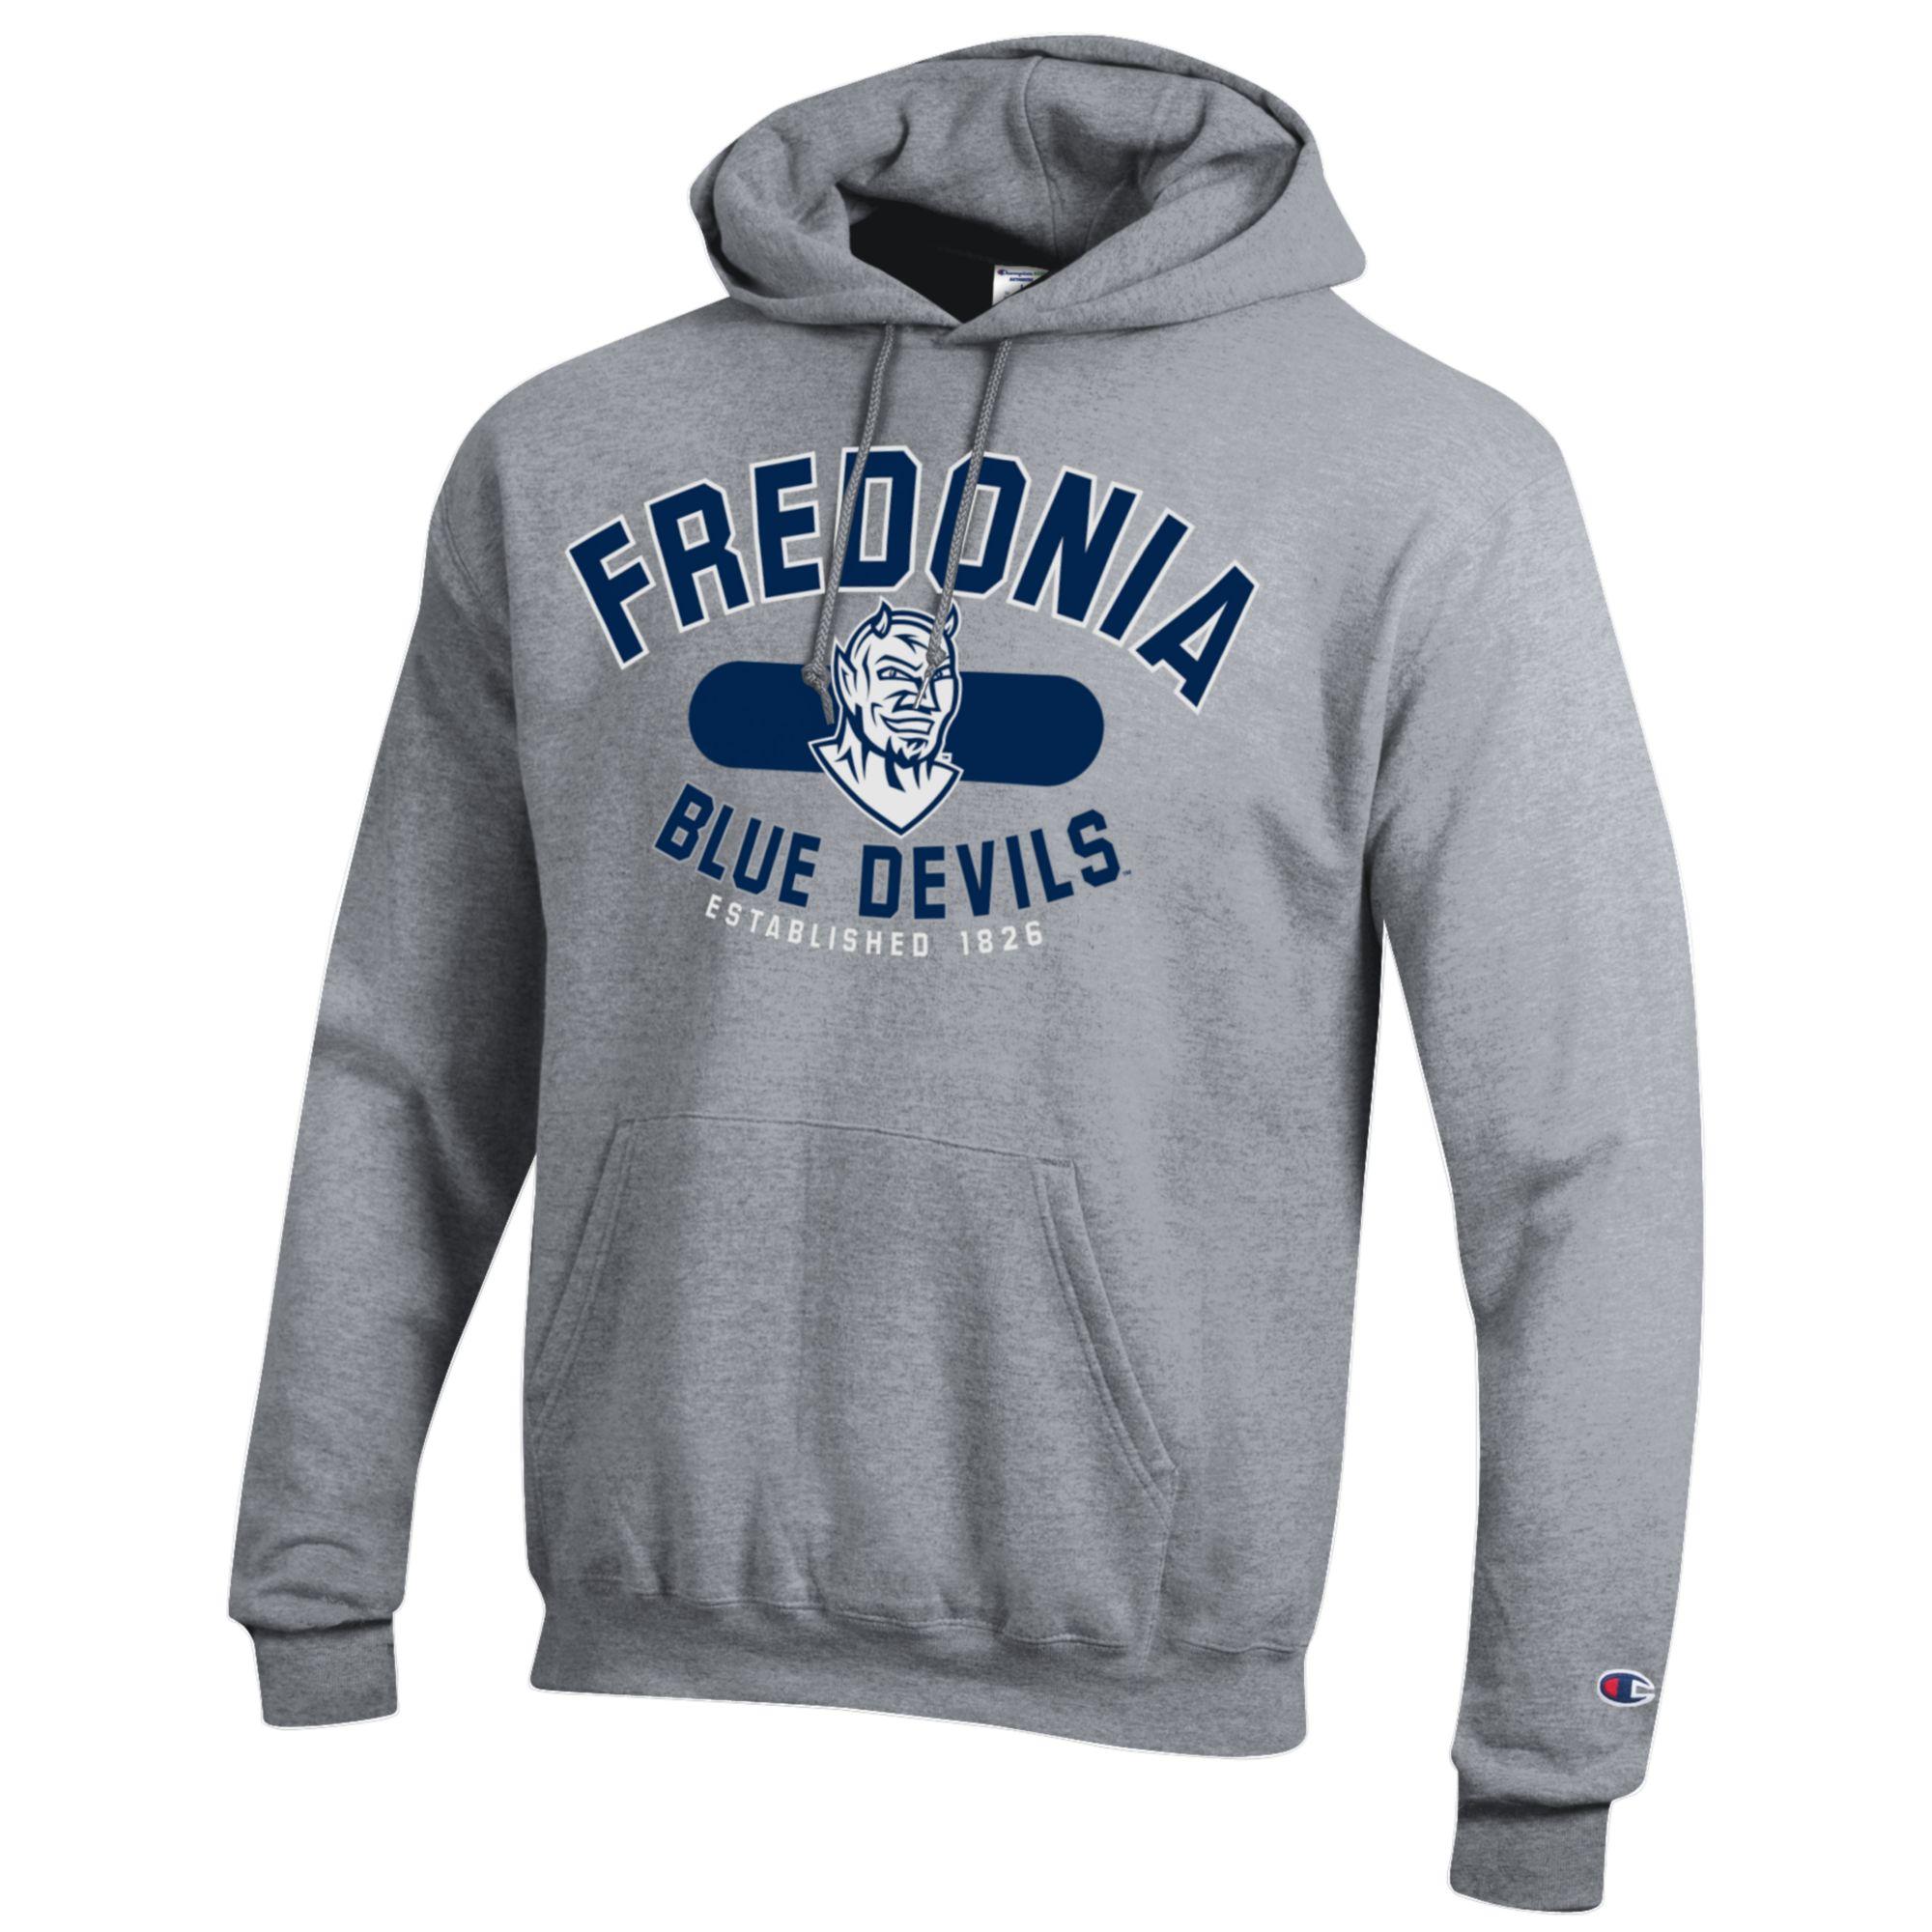 Fredonia State Blue Devils hooded sweatshirt gray - TeeShirtUniversity.com 